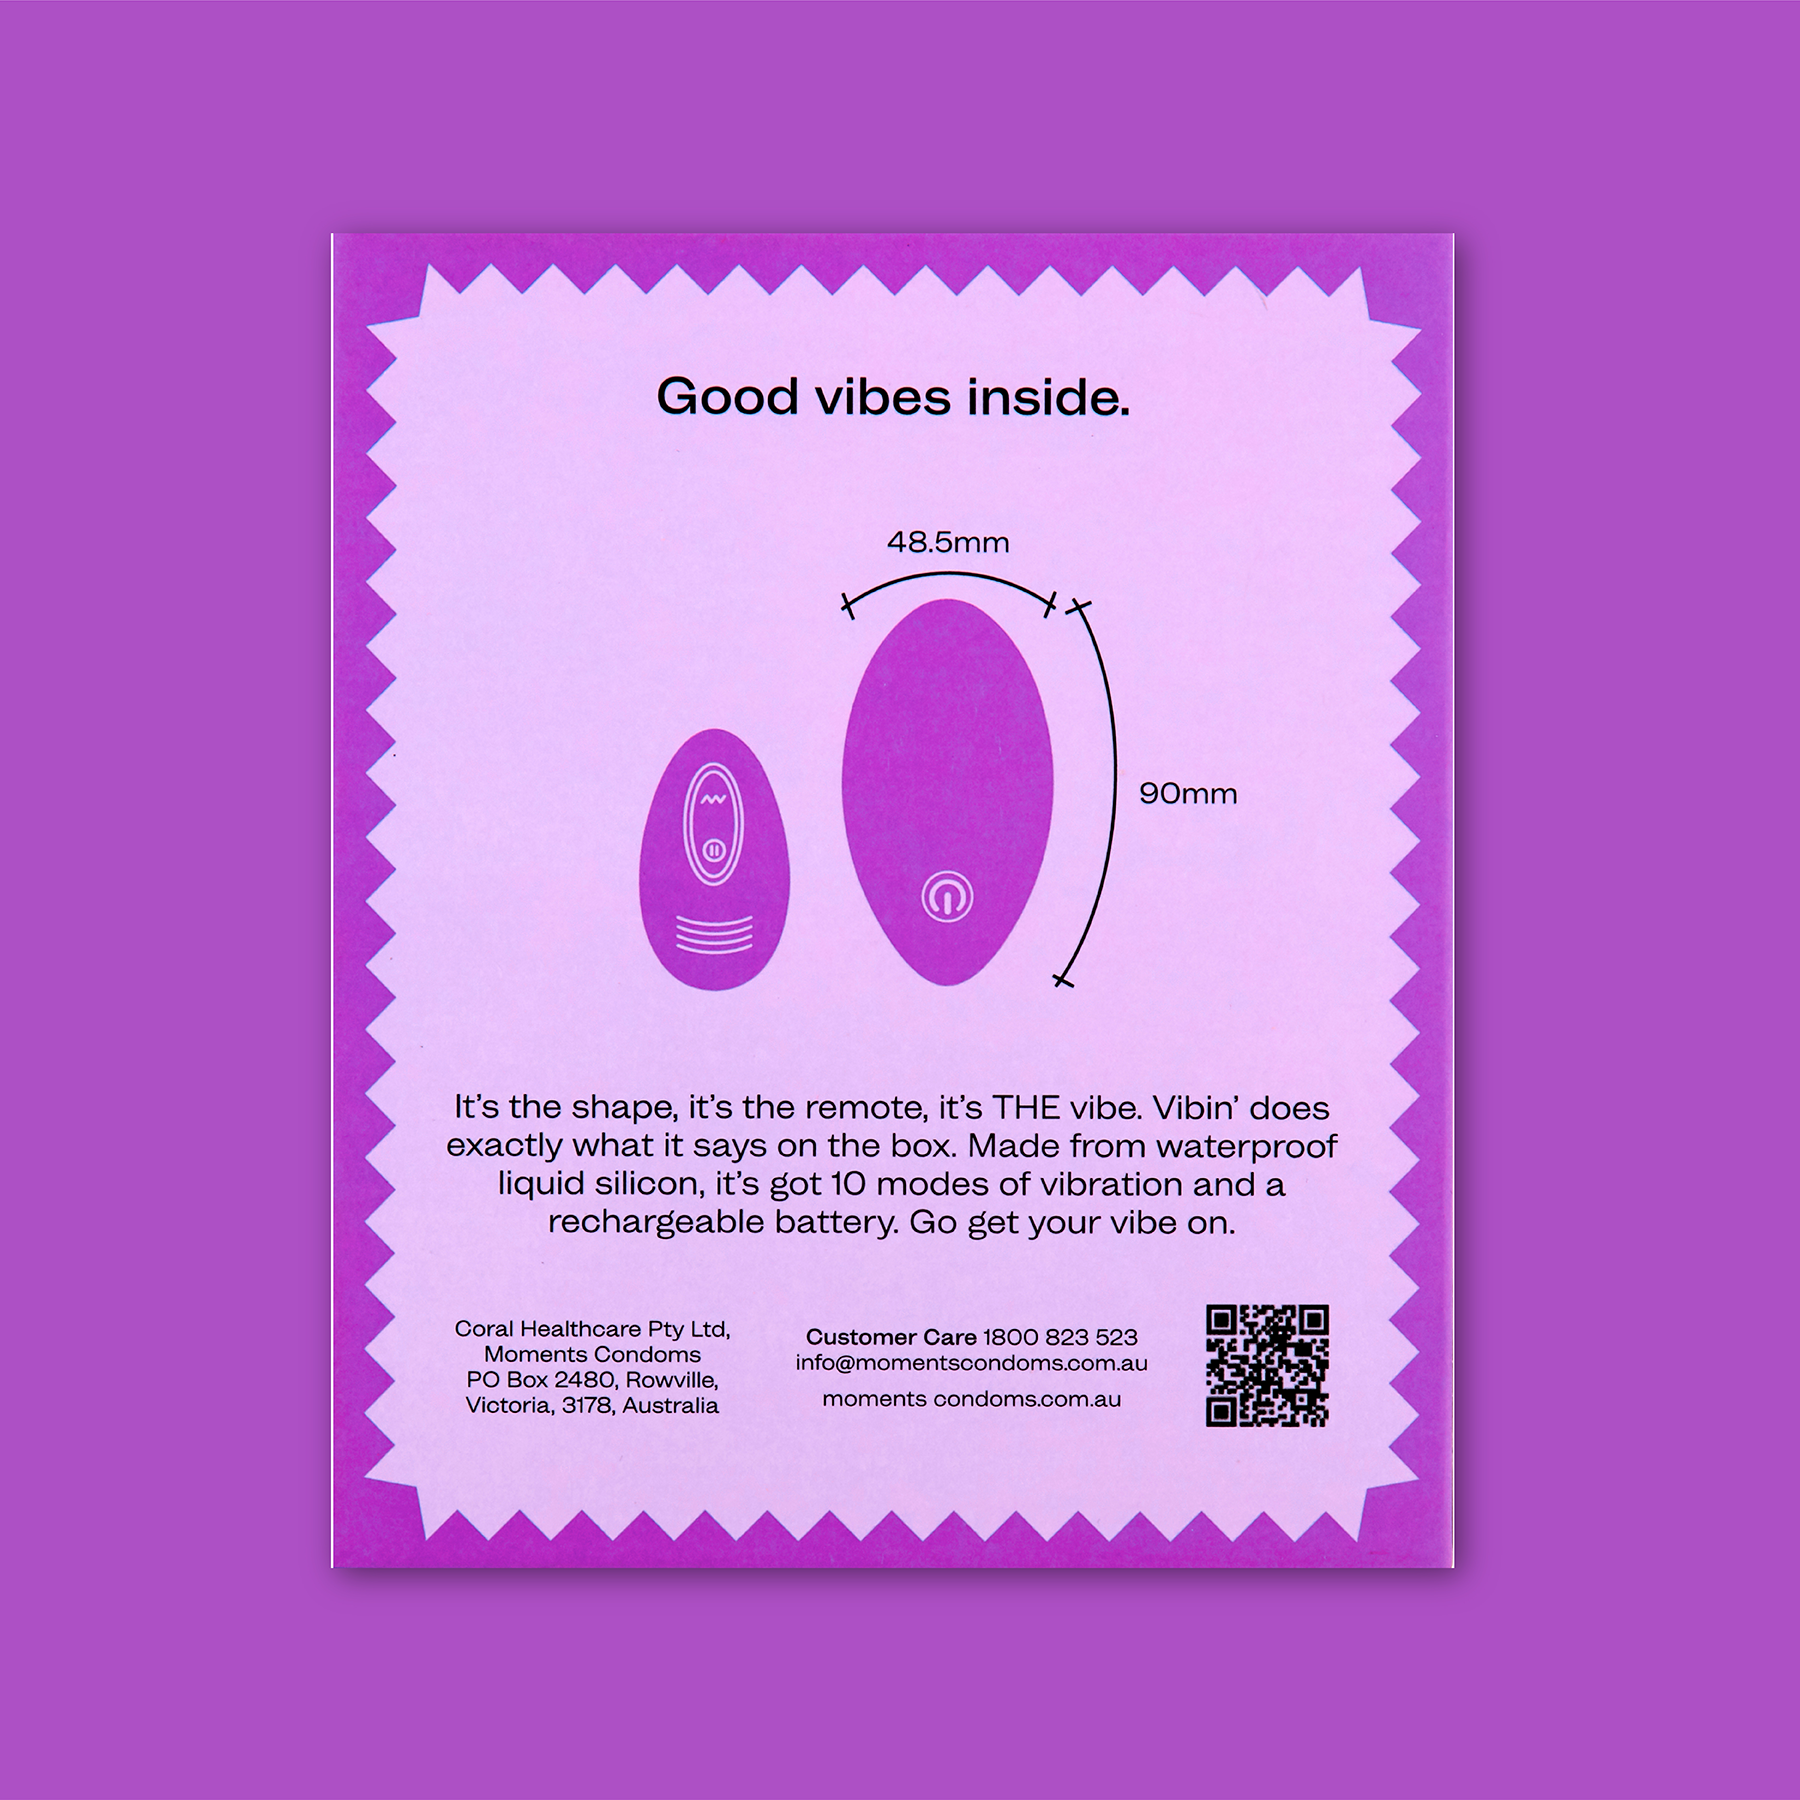 Vibin' promotional purple poster highlighting quality